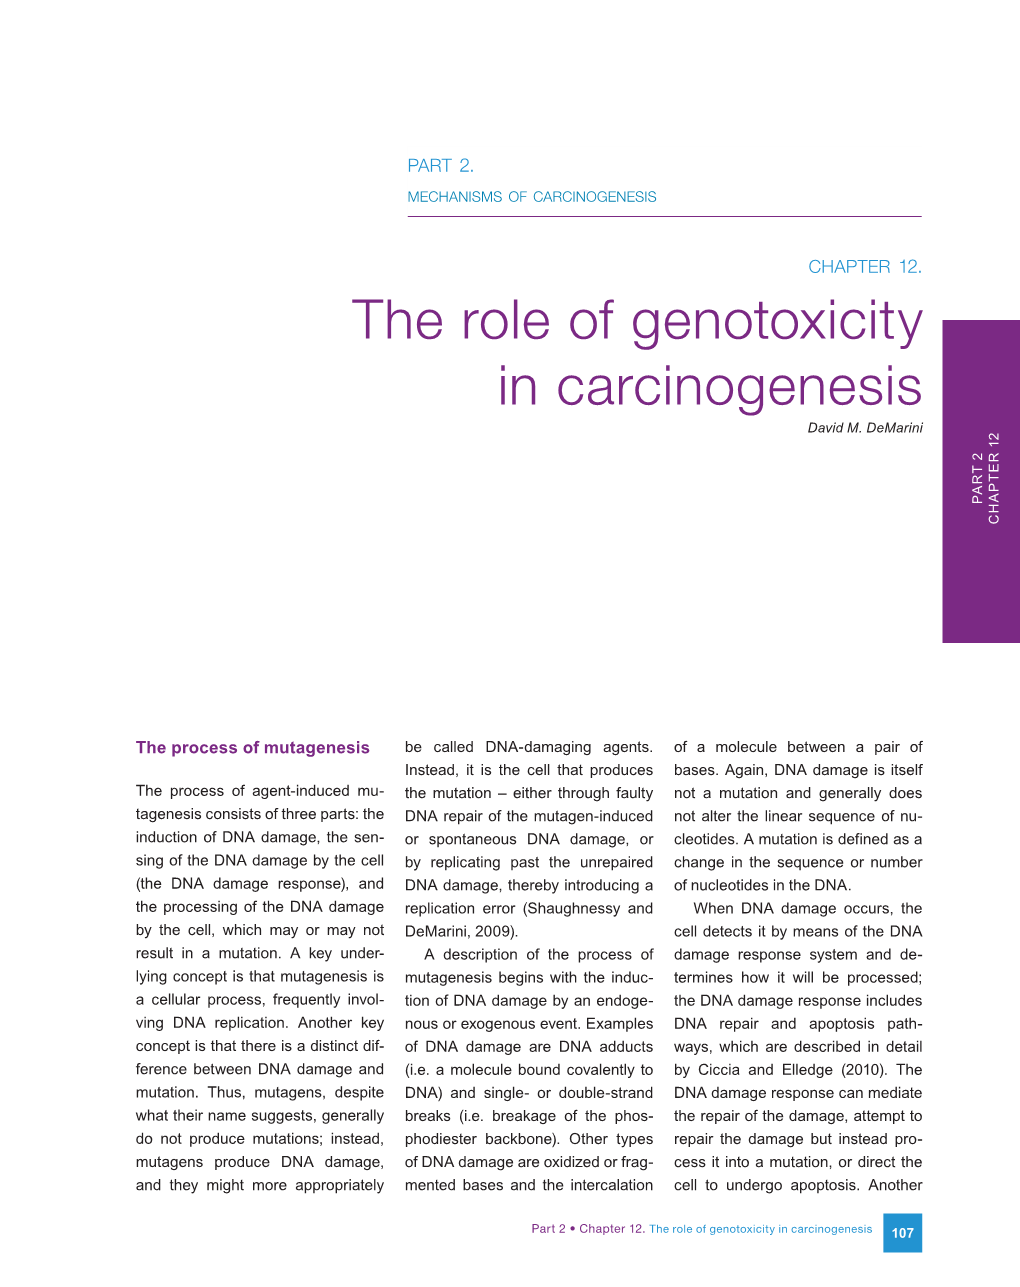 The Role of Genotoxicity in Carcinogenesis David M